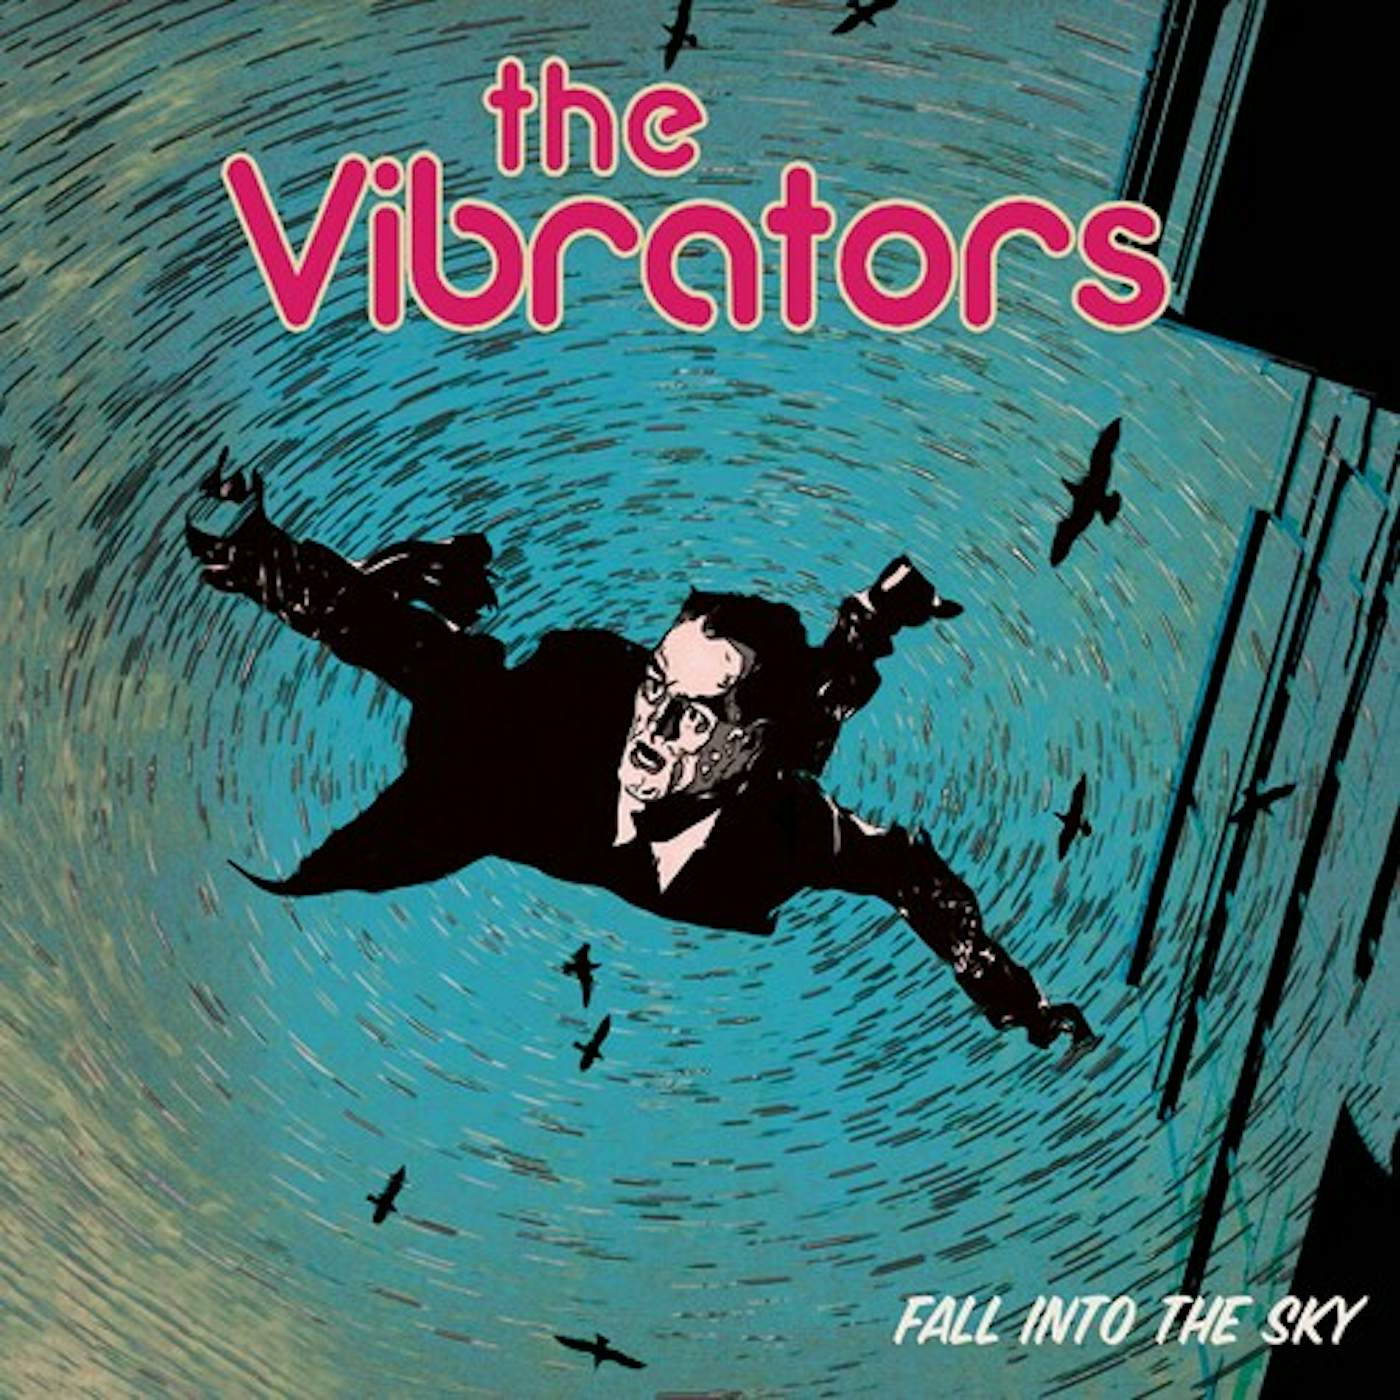 The Vibrators FALL INTO THE SKY CD